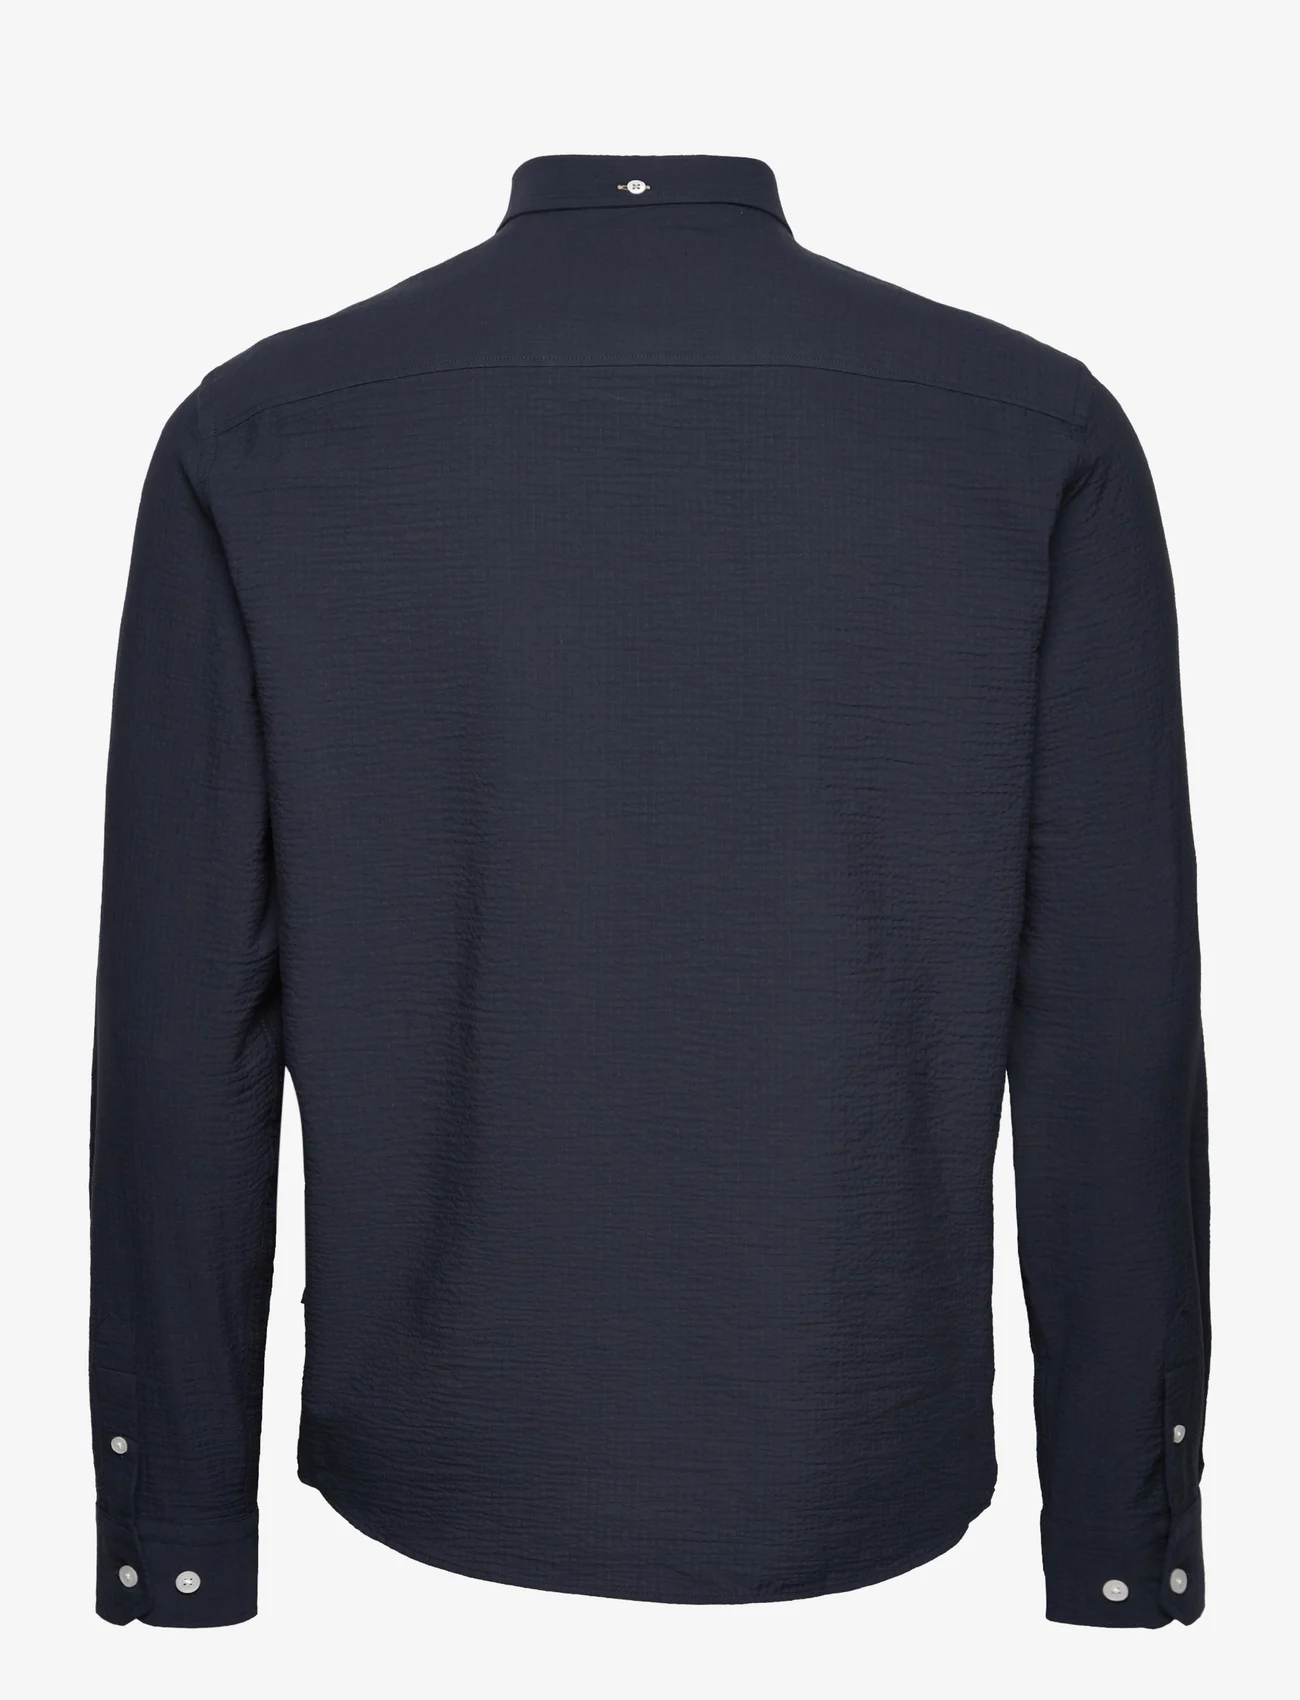 Kronstadt - Johan Seersucker shirt - basic skjorter - navy/navy - 1